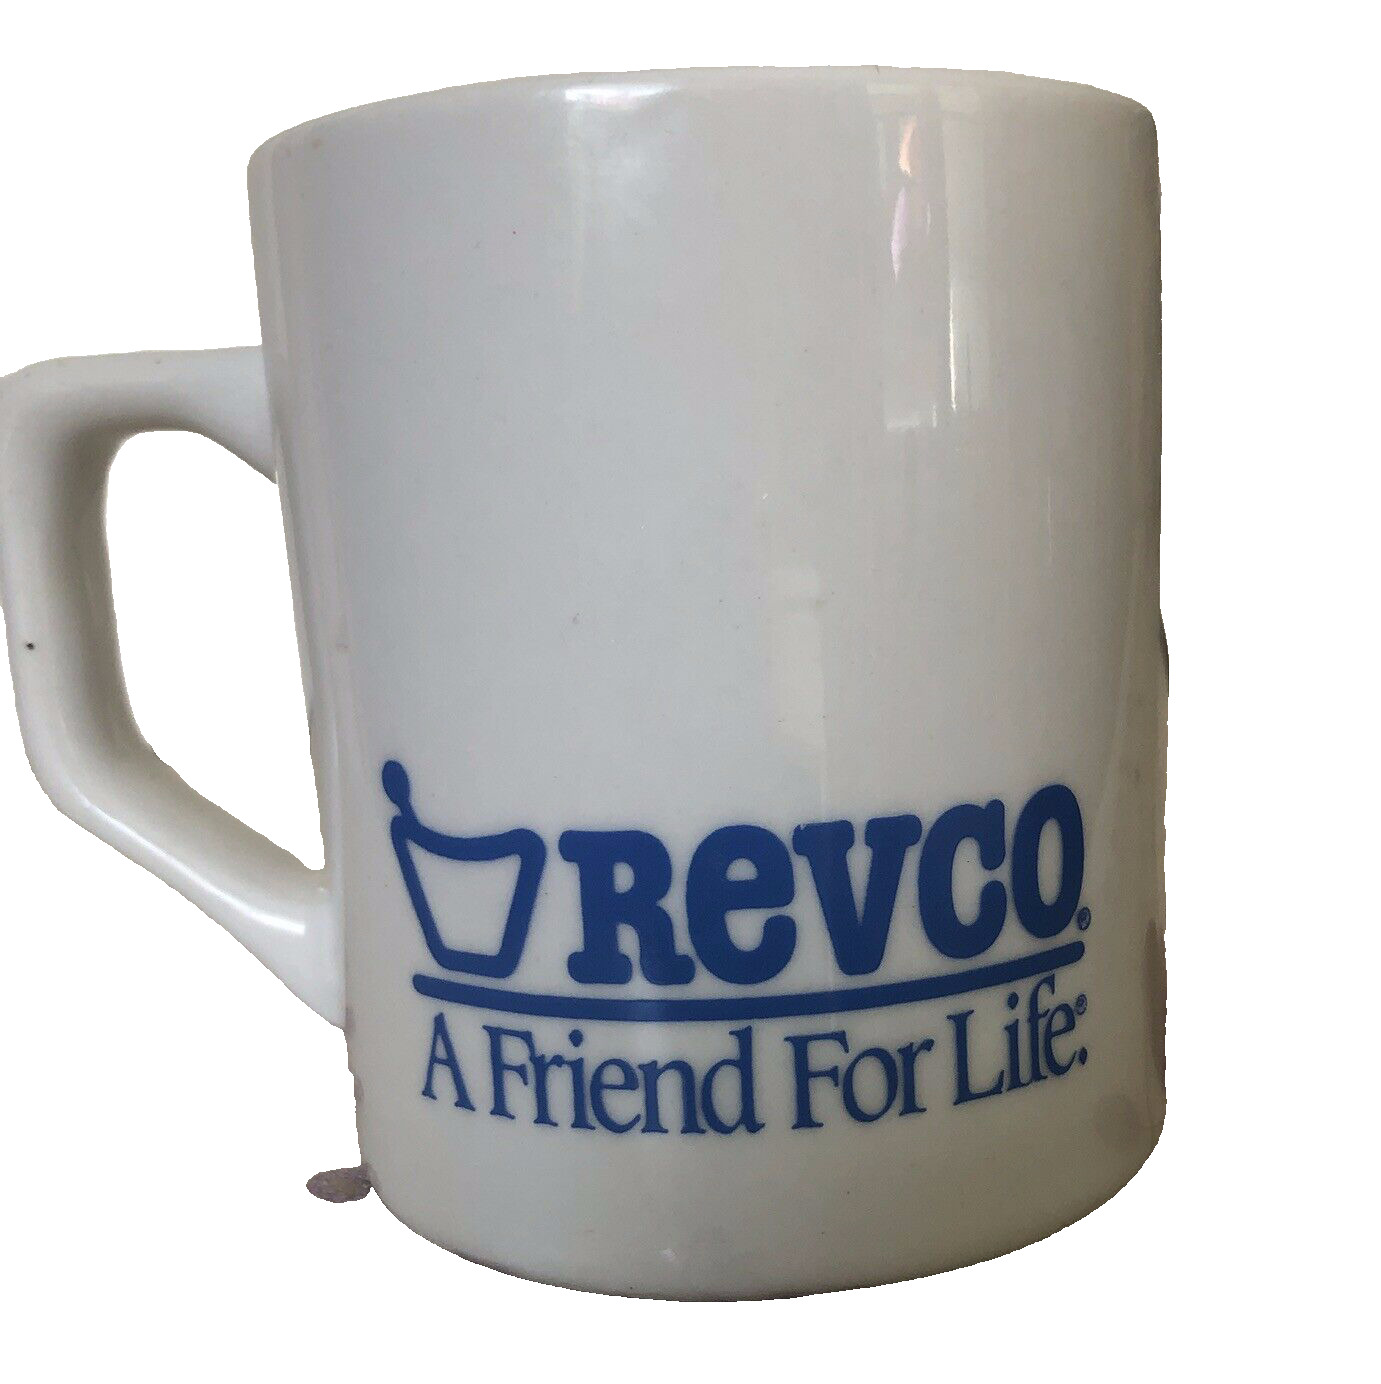 Vintage Revco Drug Store Mug Old Advertising Cup 